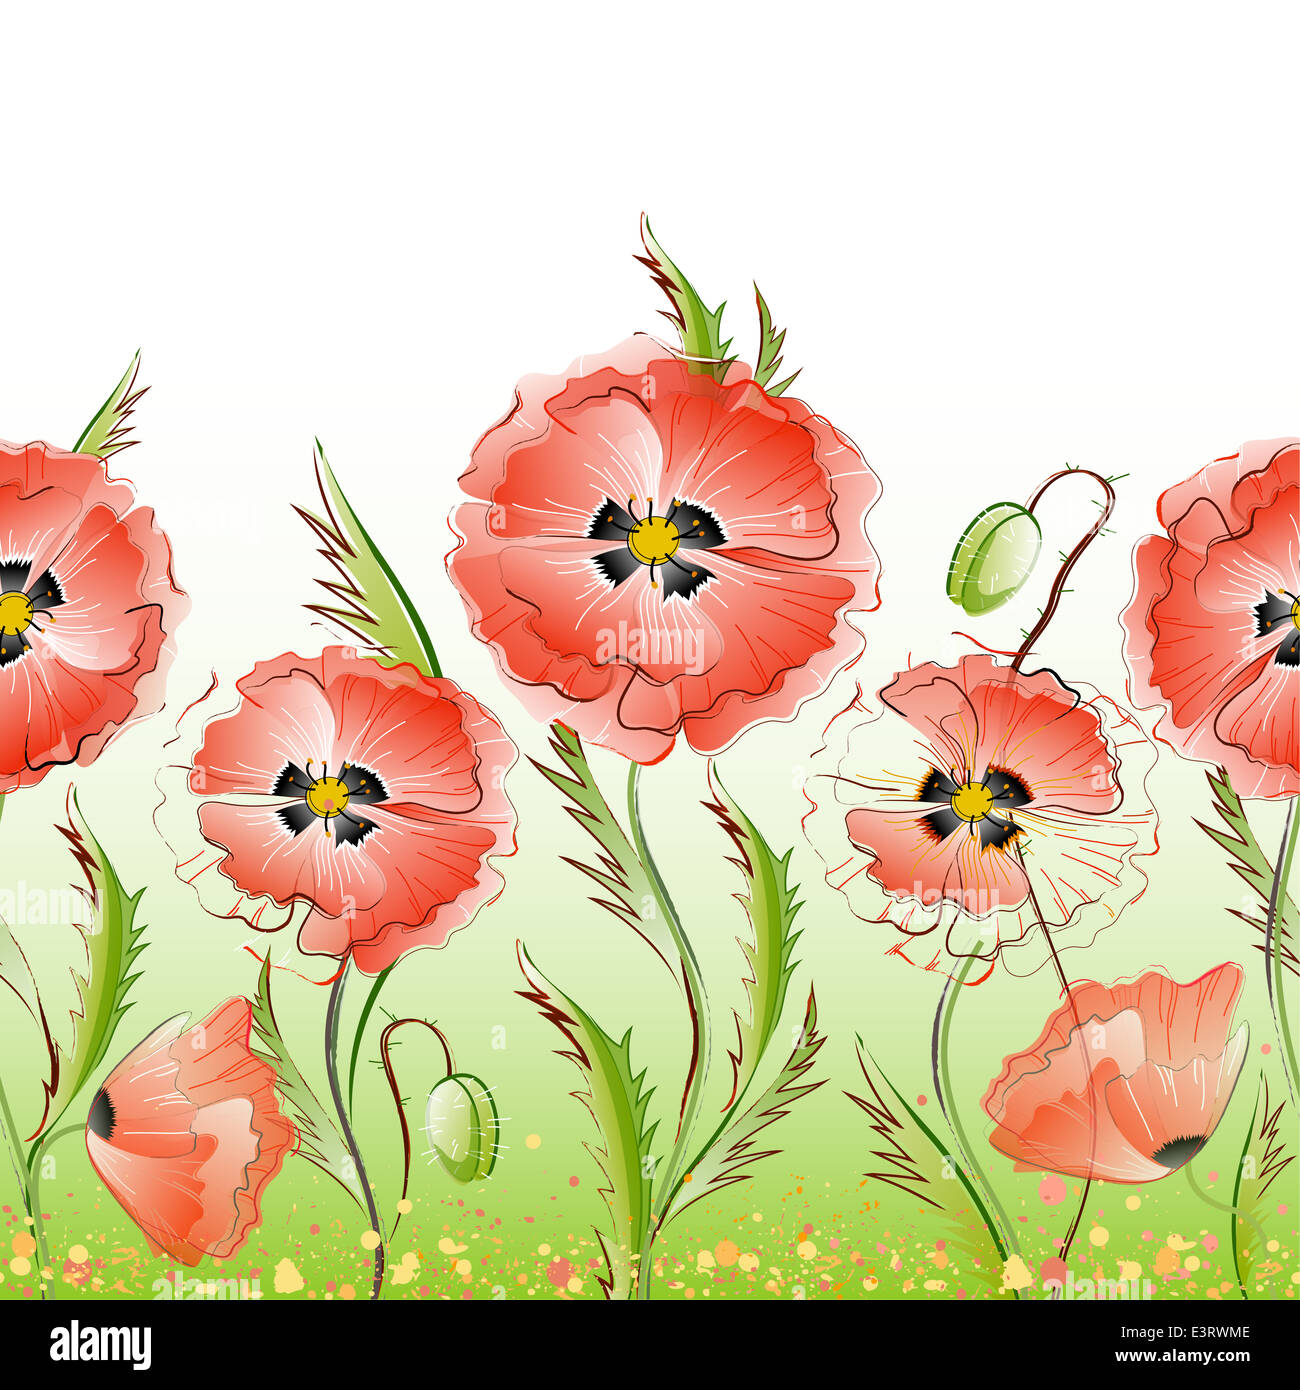 Red Poppy Flowers Seamless Texture Stock Photo